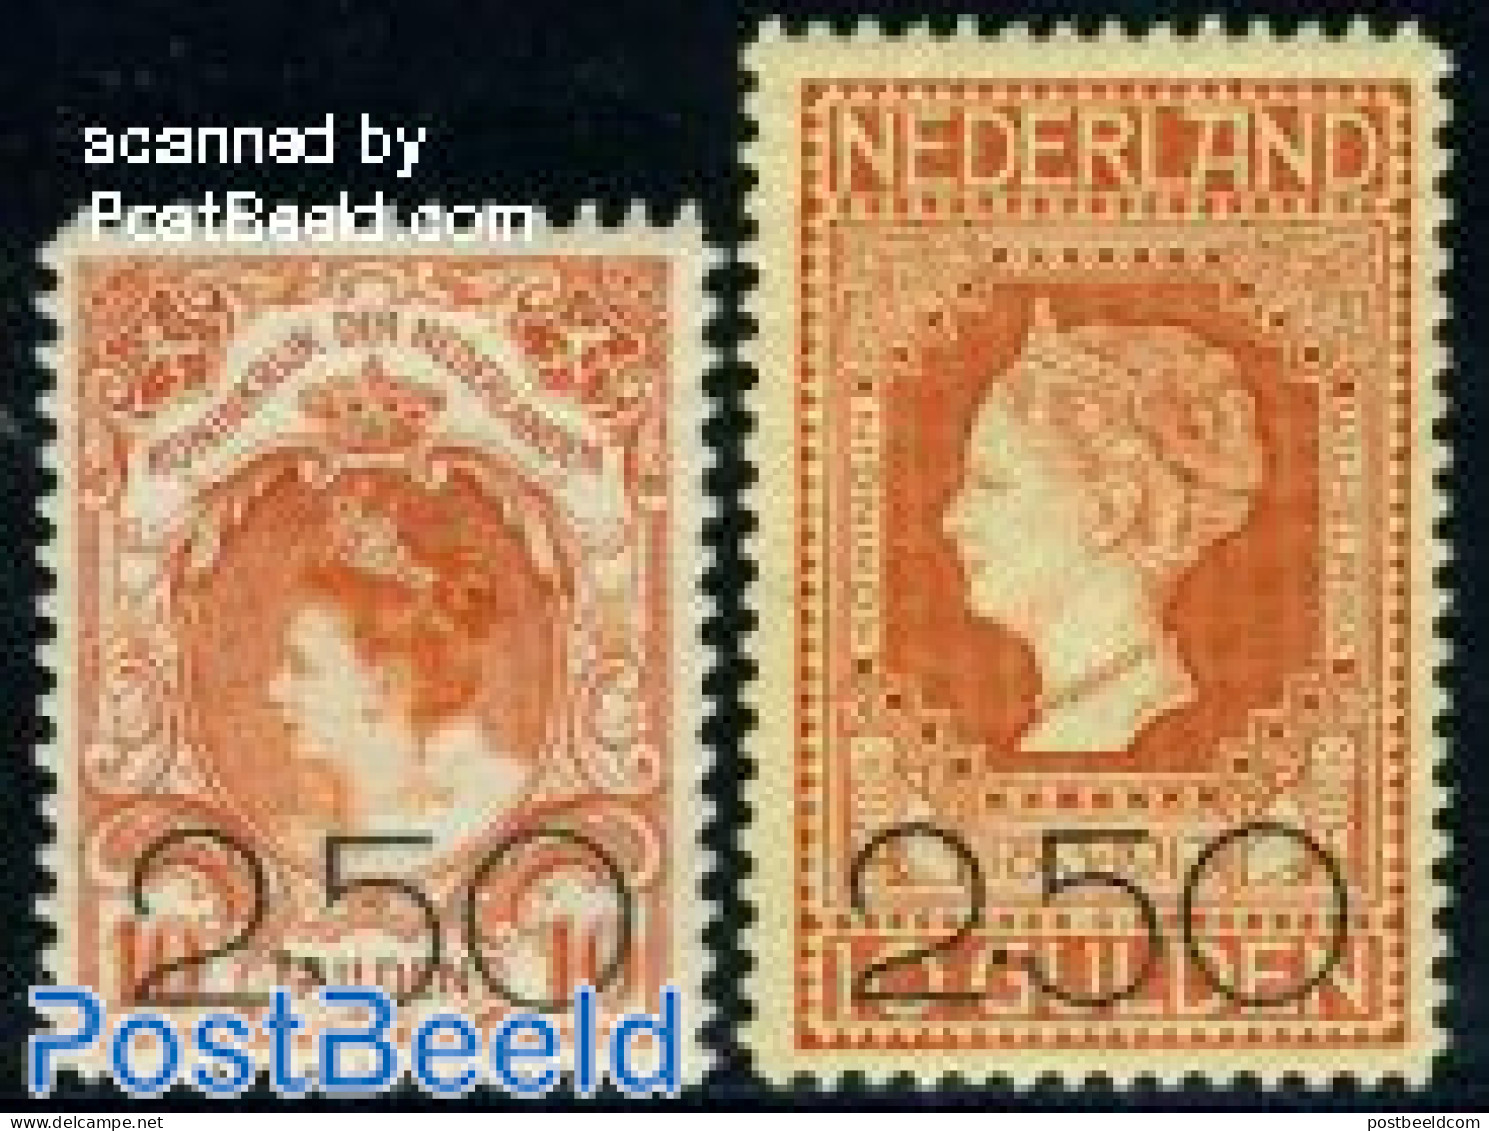 Netherlands 1920 Overprints 2v, Unused (hinged) - Neufs